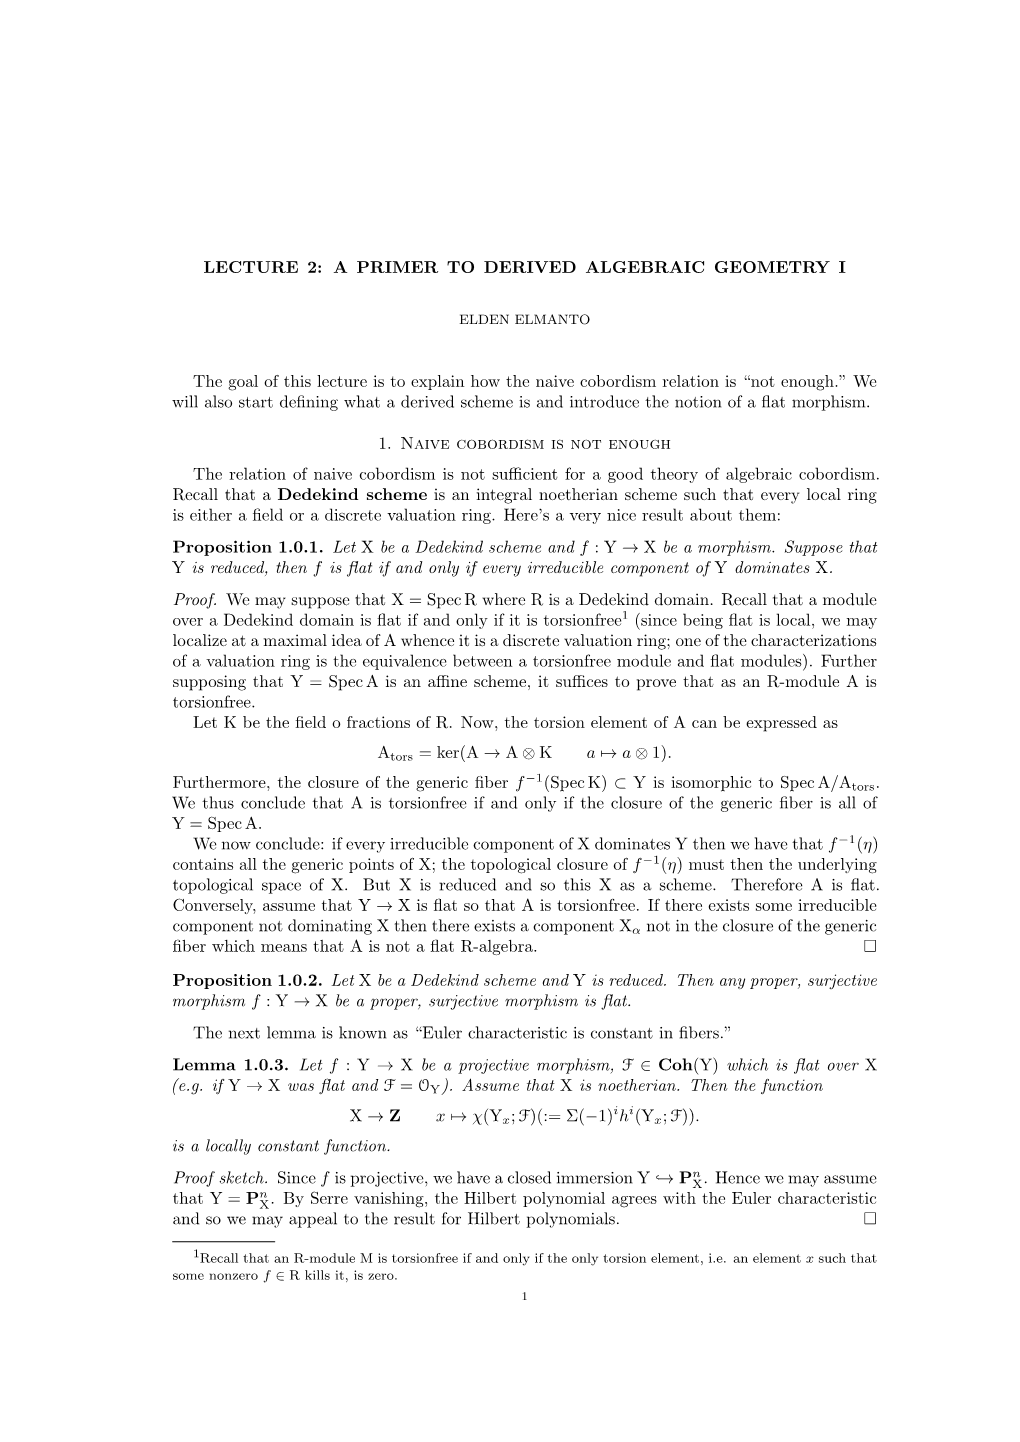 Lecture 2: a Primer to Derived Algebraic Geometry I